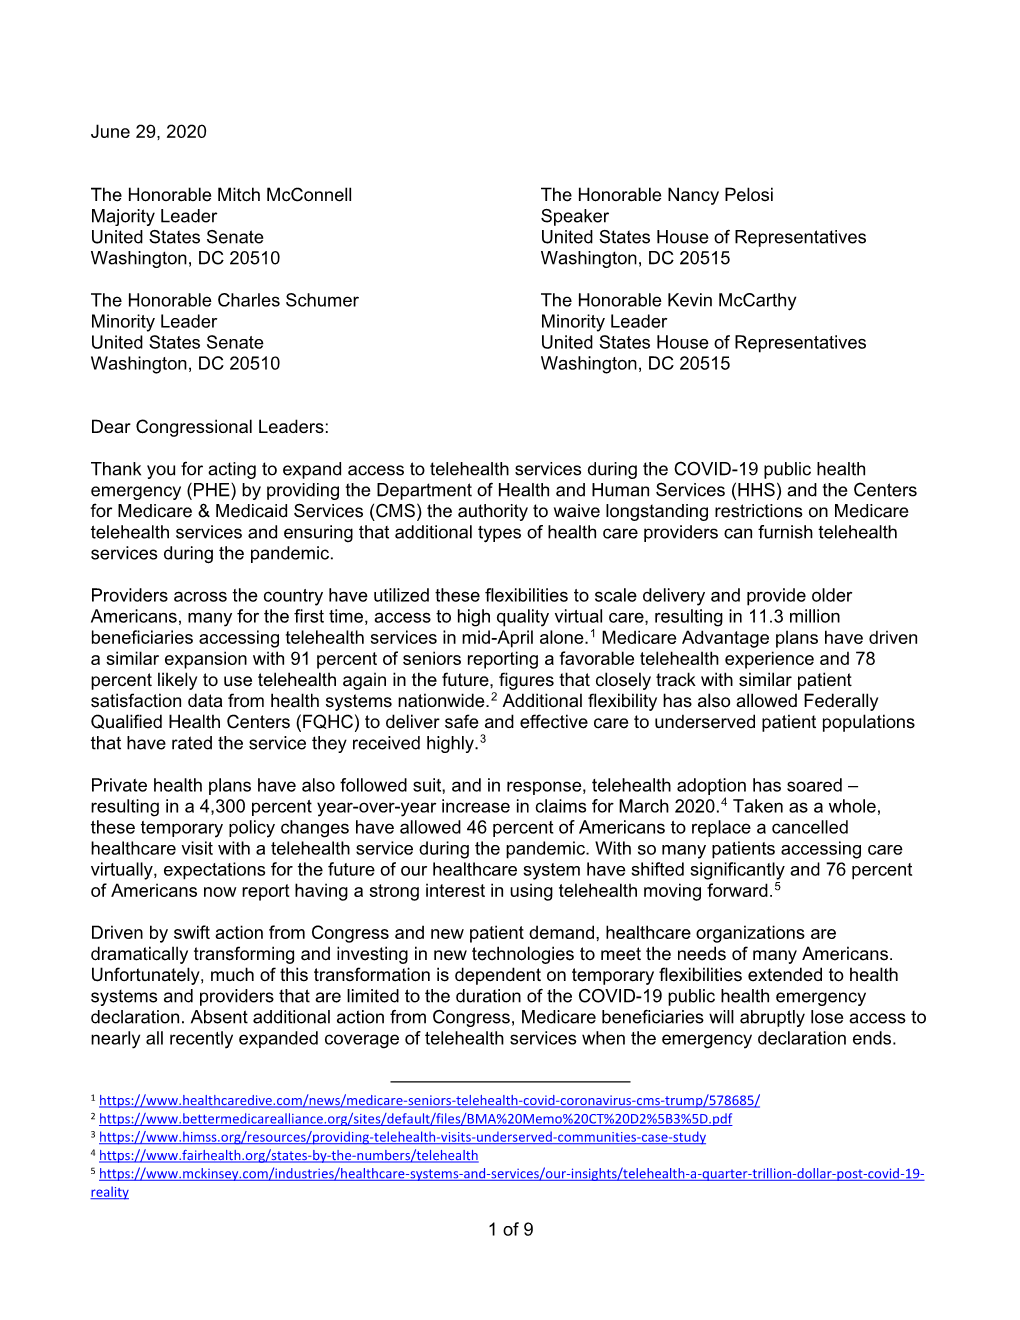 Health Partner Letter to Congress Re Telehealth Priorities